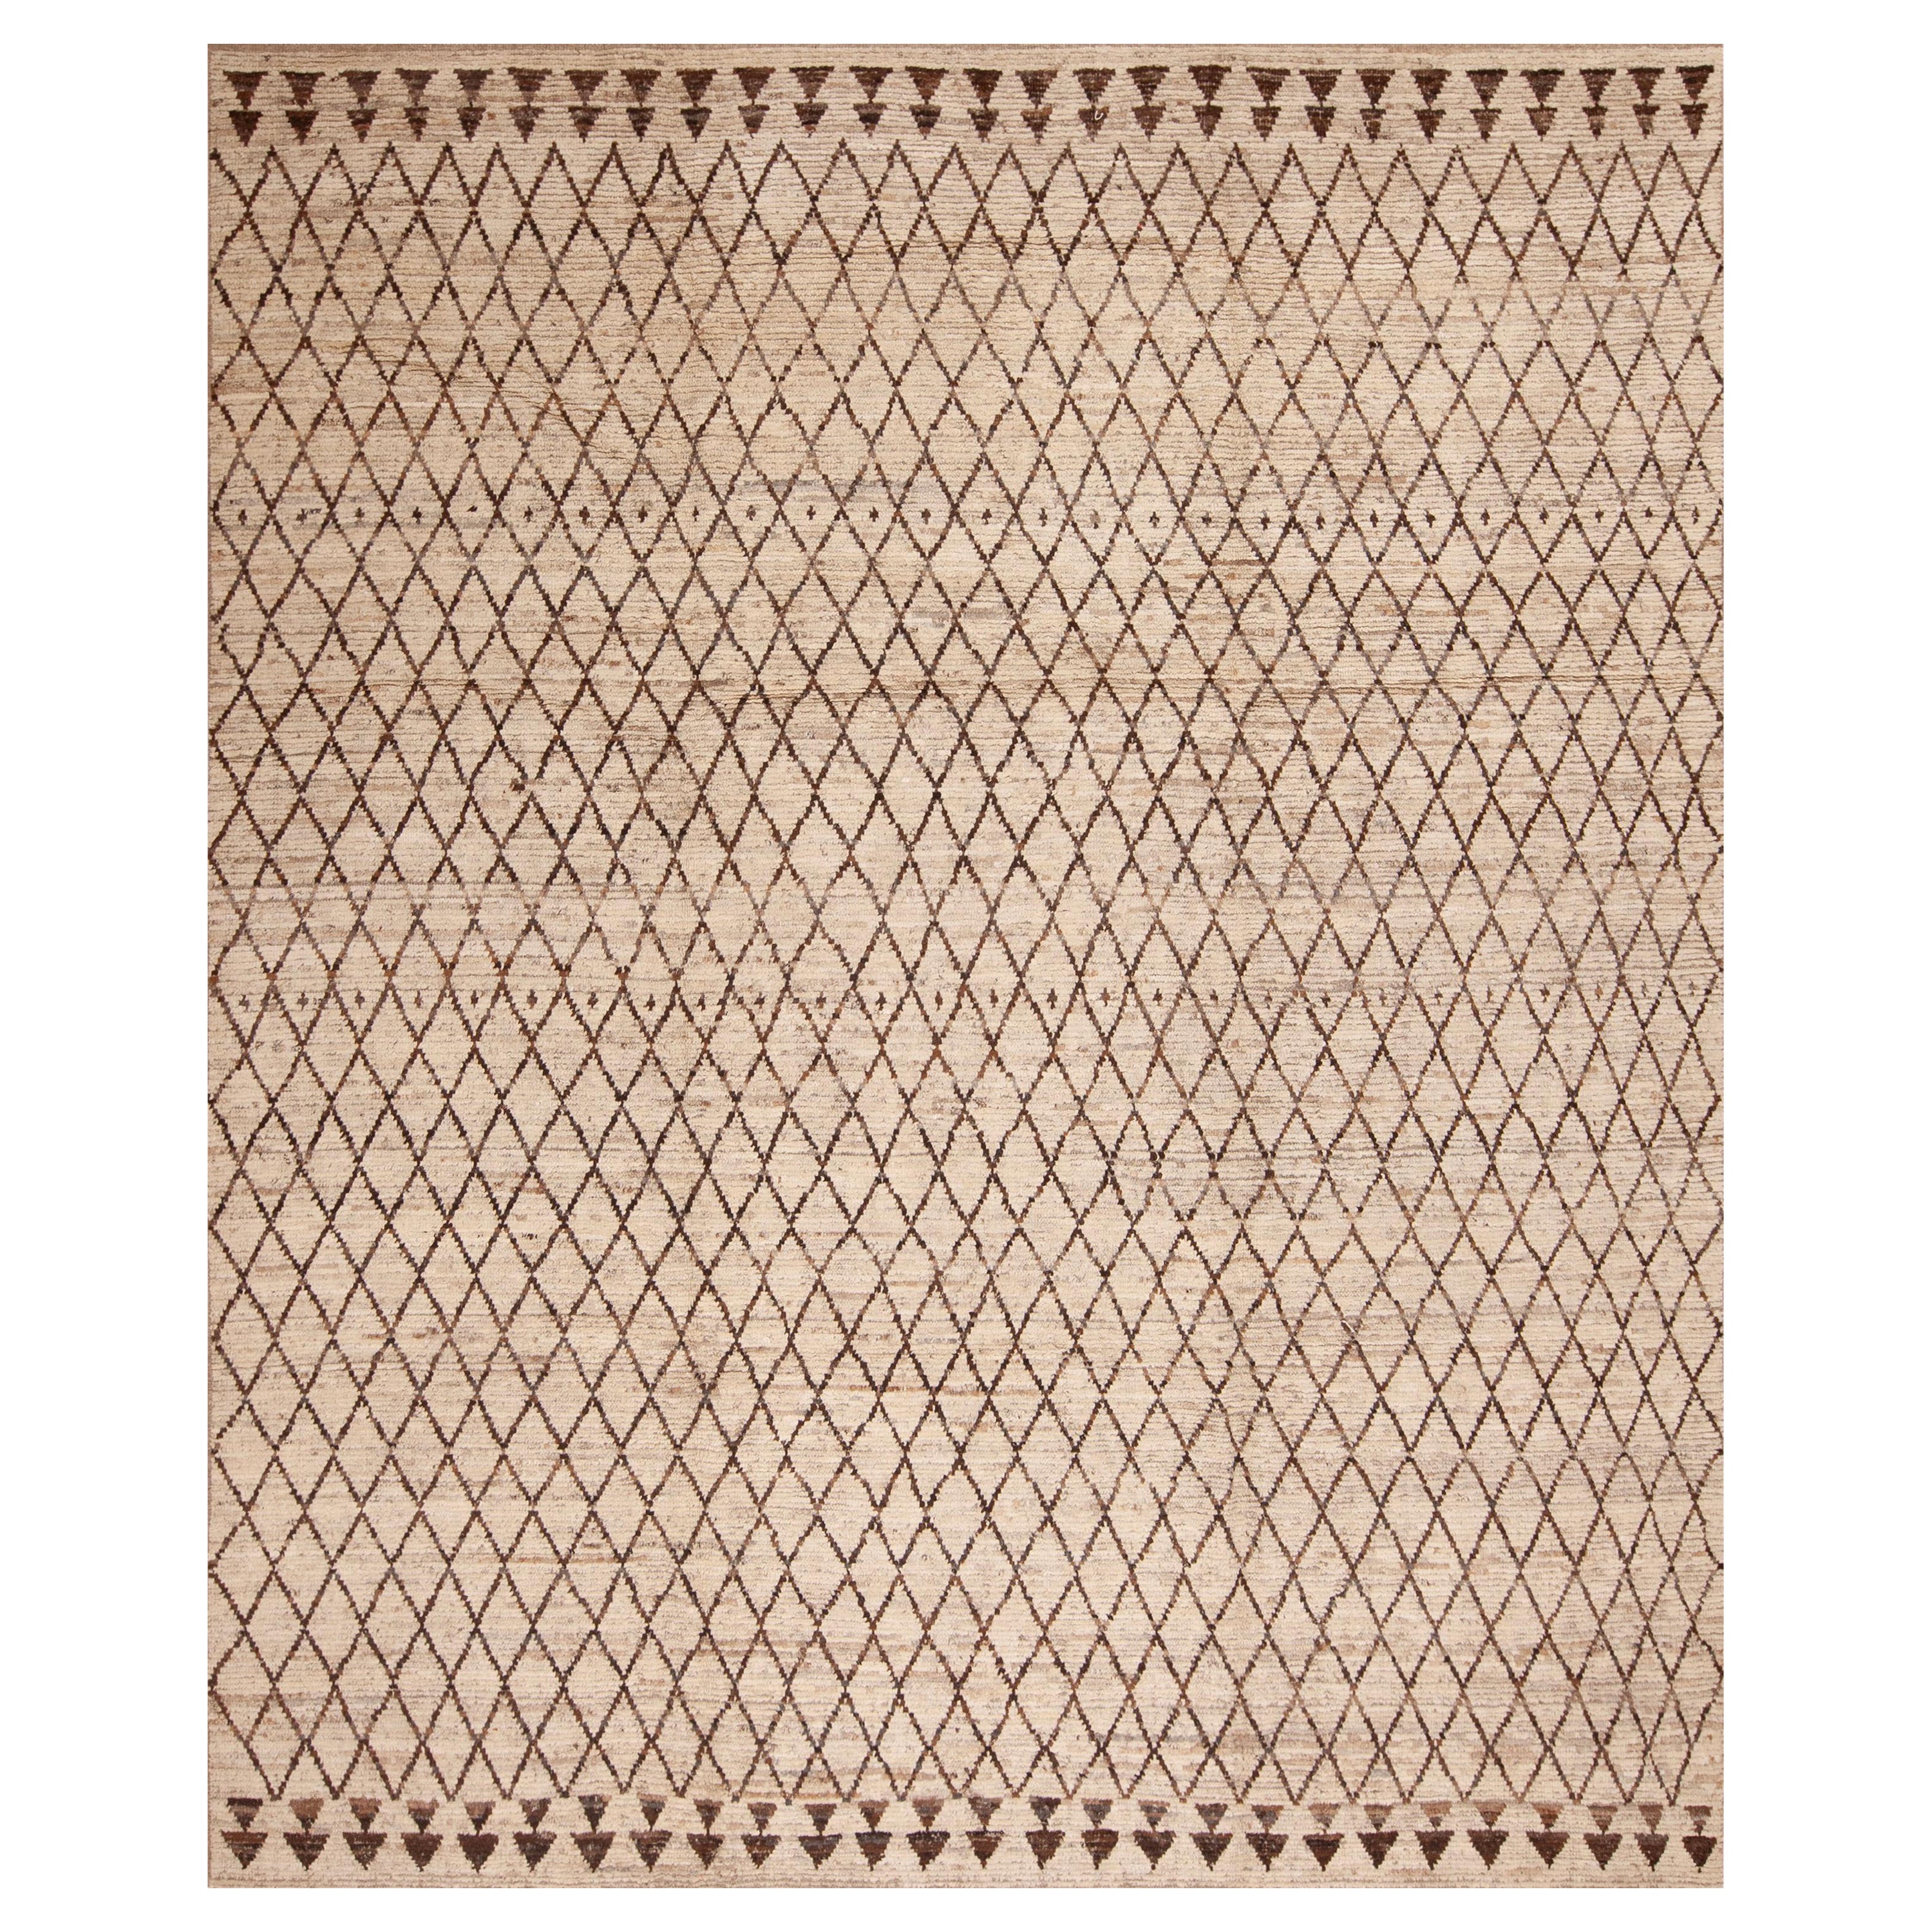 Collection Nazmiyal, motif grille en losanges, taille de pièce moderne 9'5" x 11'4" en vente